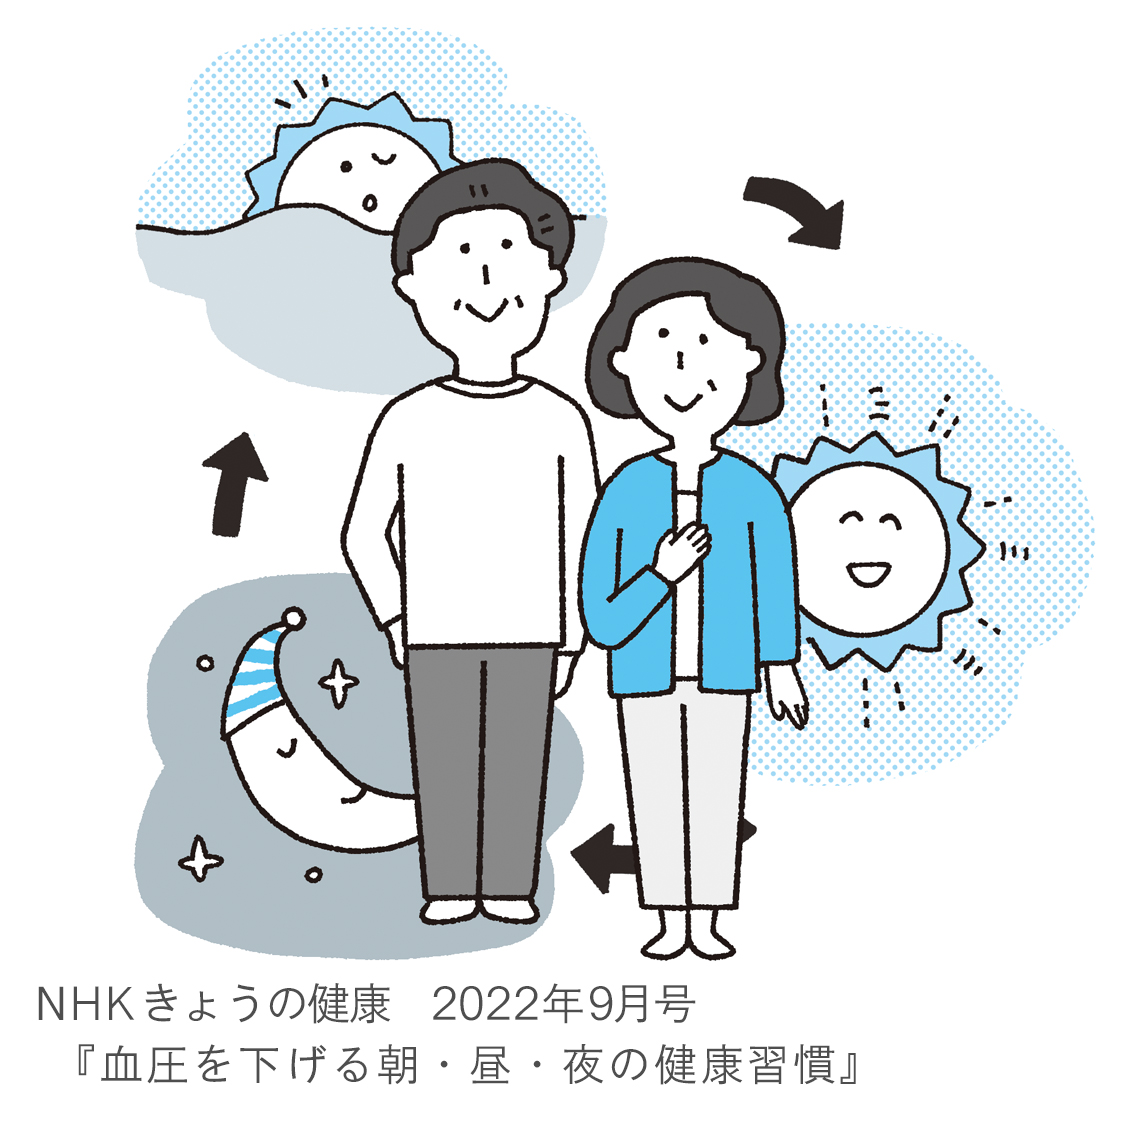 NHKきょうの健康　2022年9月号『血圧を下げる朝・昼・夜の健康習慣』特集のイラスト